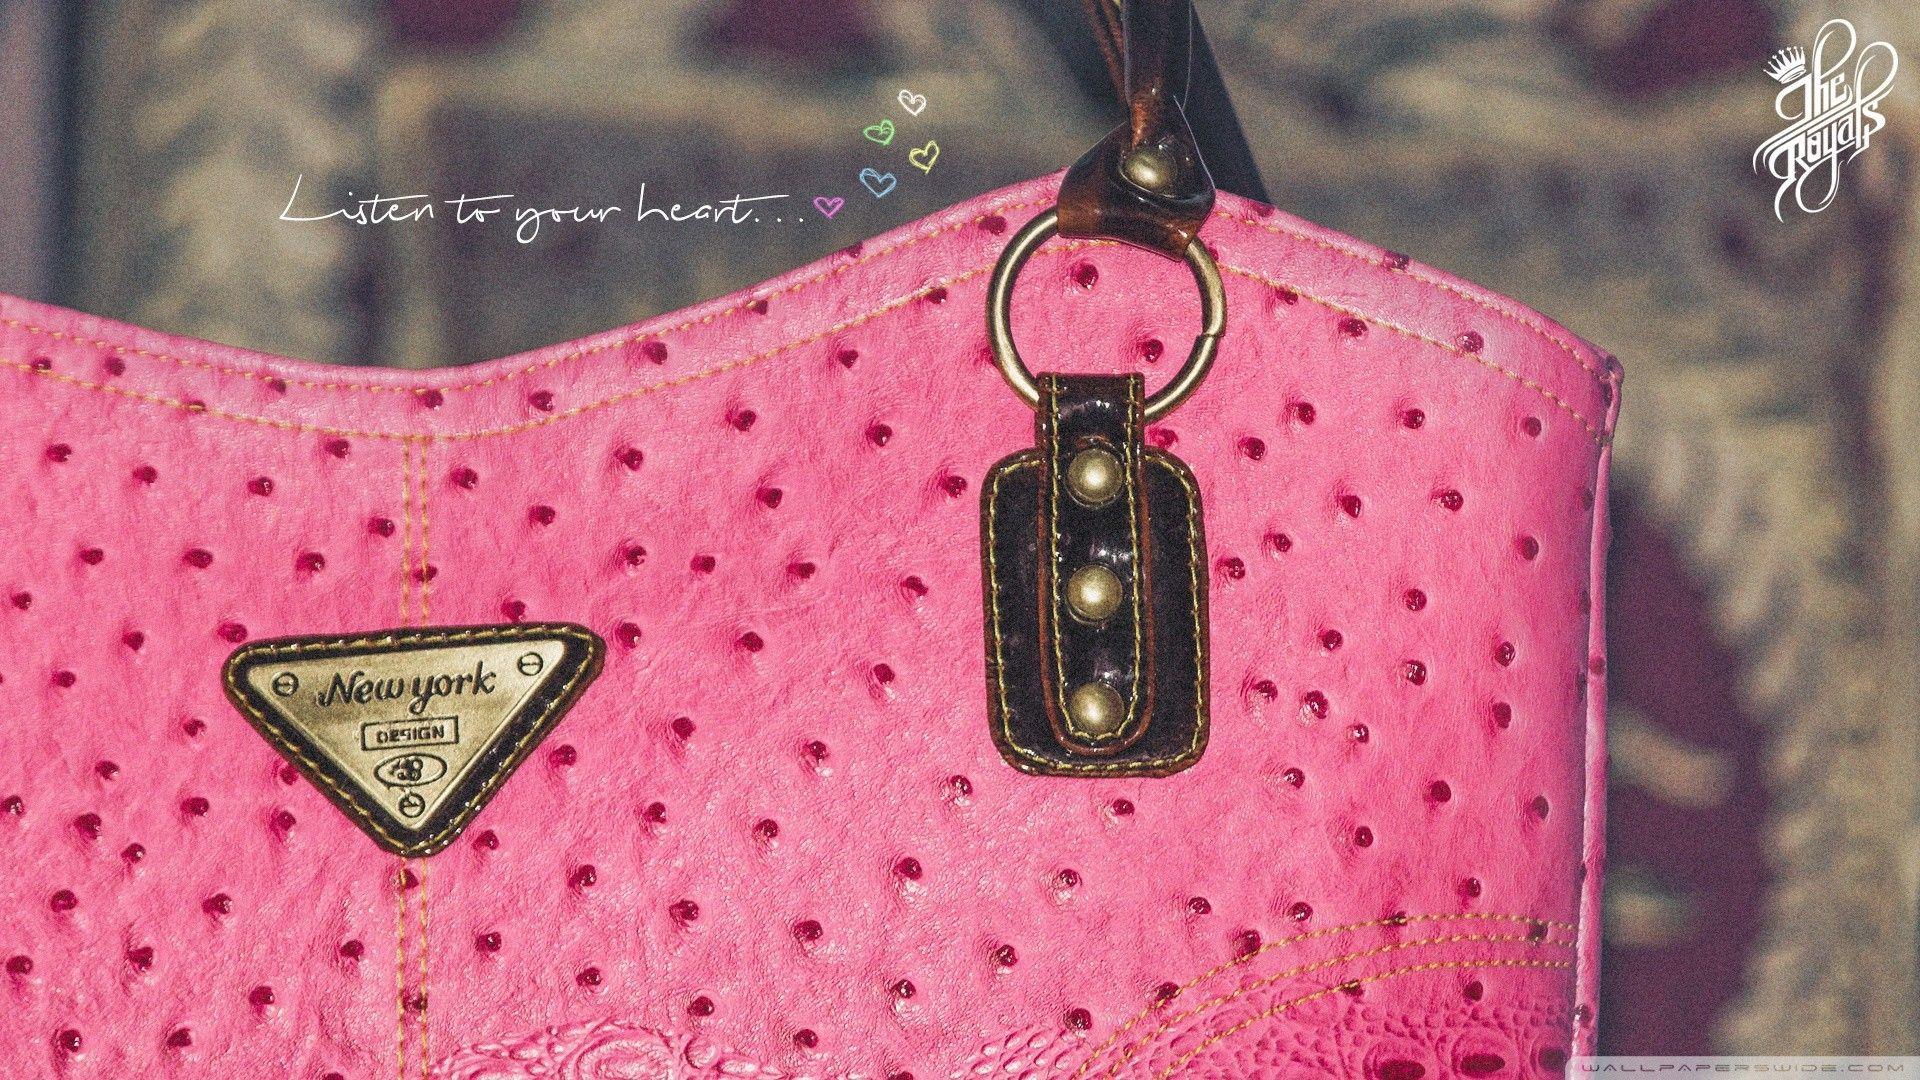 Branded pink bag for girls wallpaper and image